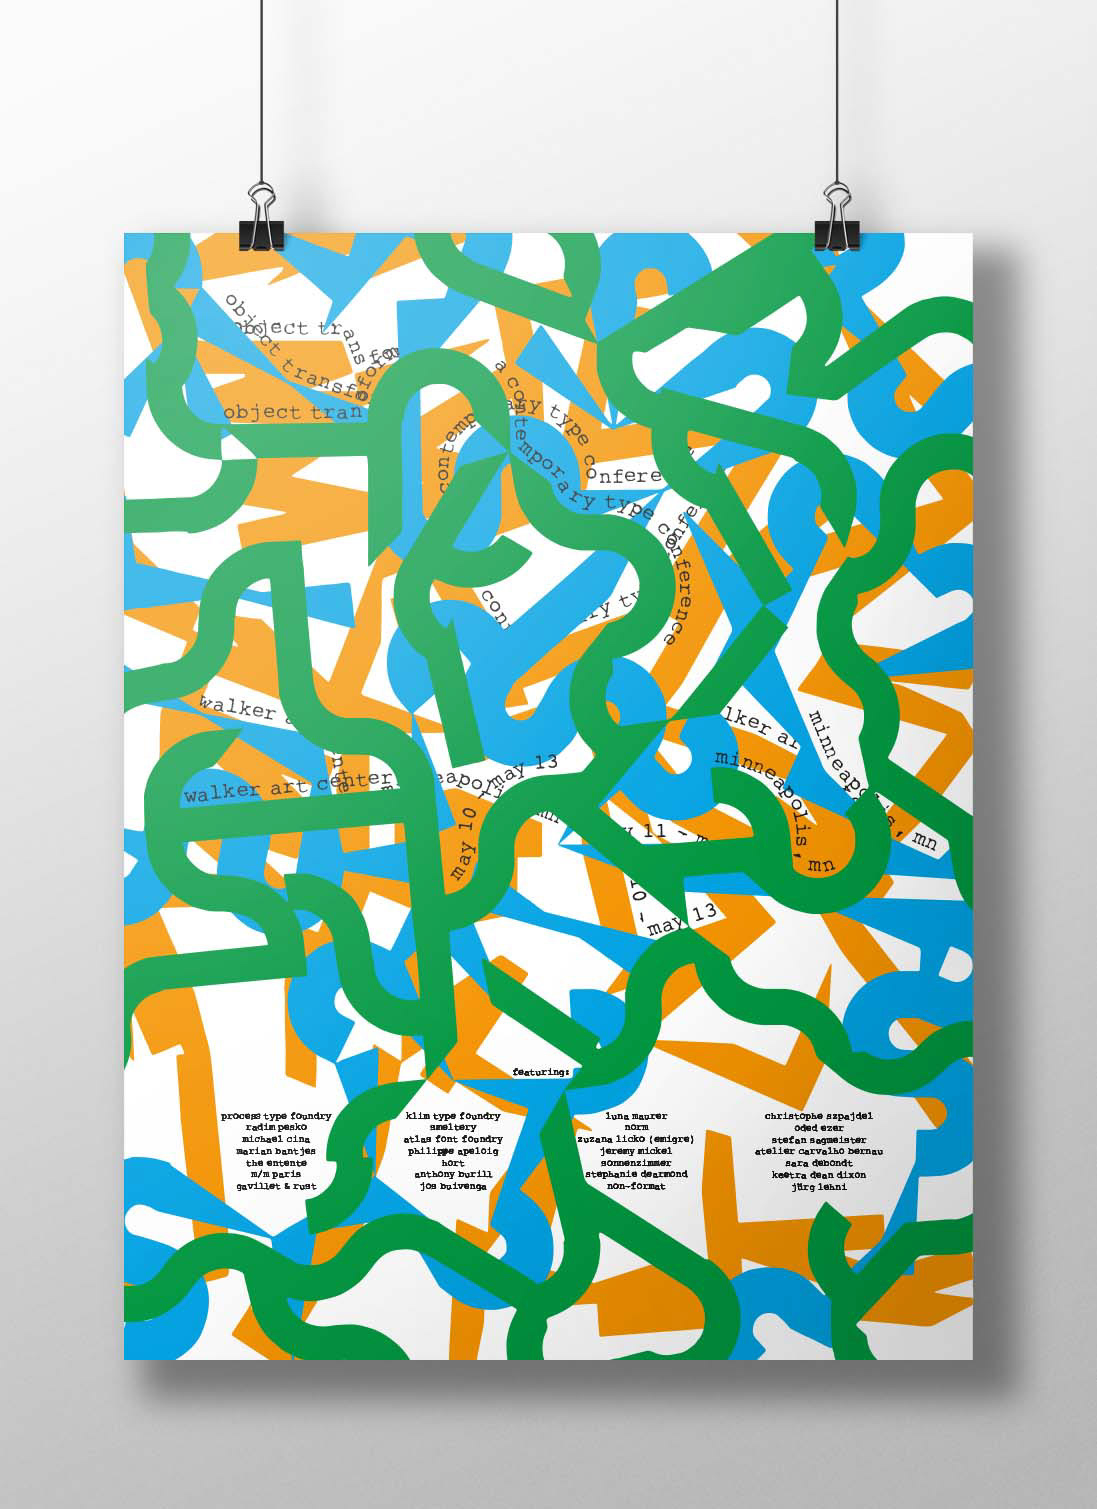 poster Poster series fungus vinyl Luna Mauer student project initials public